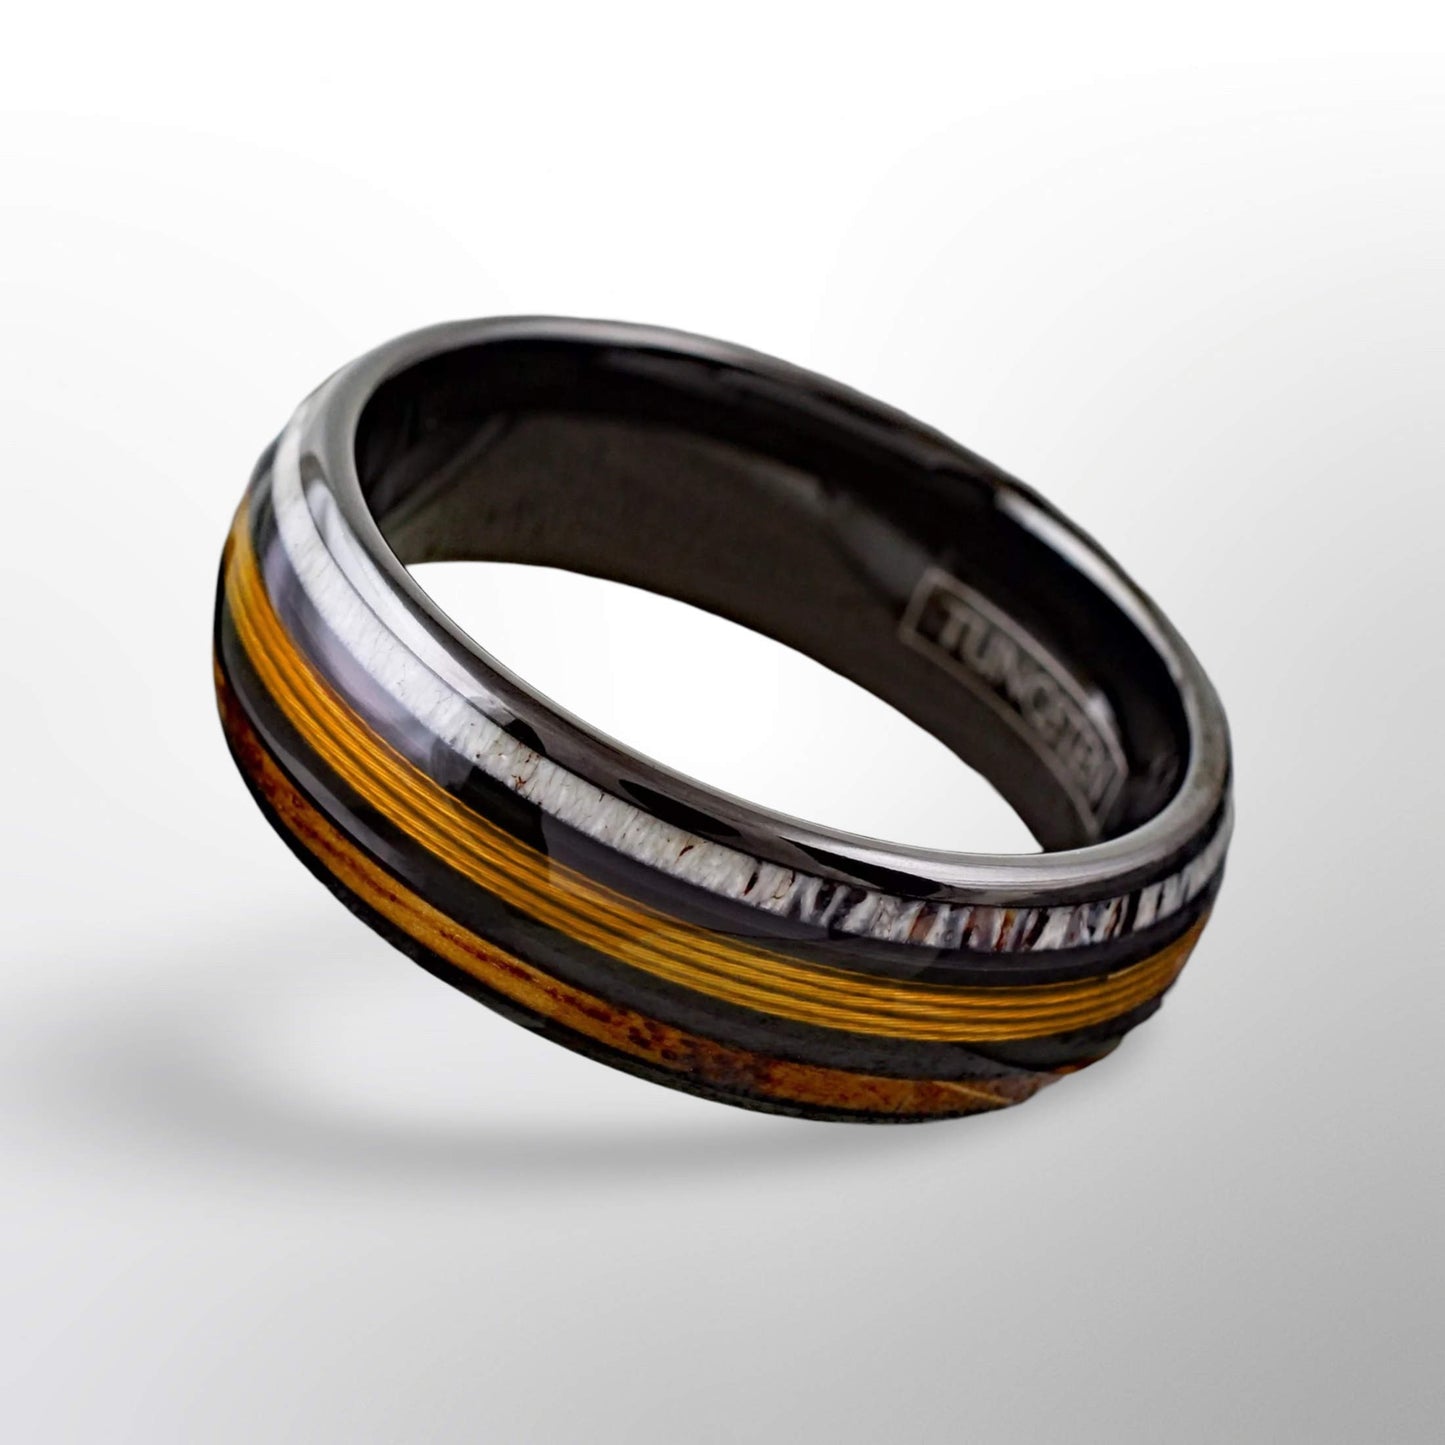 Moose Antler, Gold Fishing Line, & Whisky Wood Ring, Gift for Outdoorsman